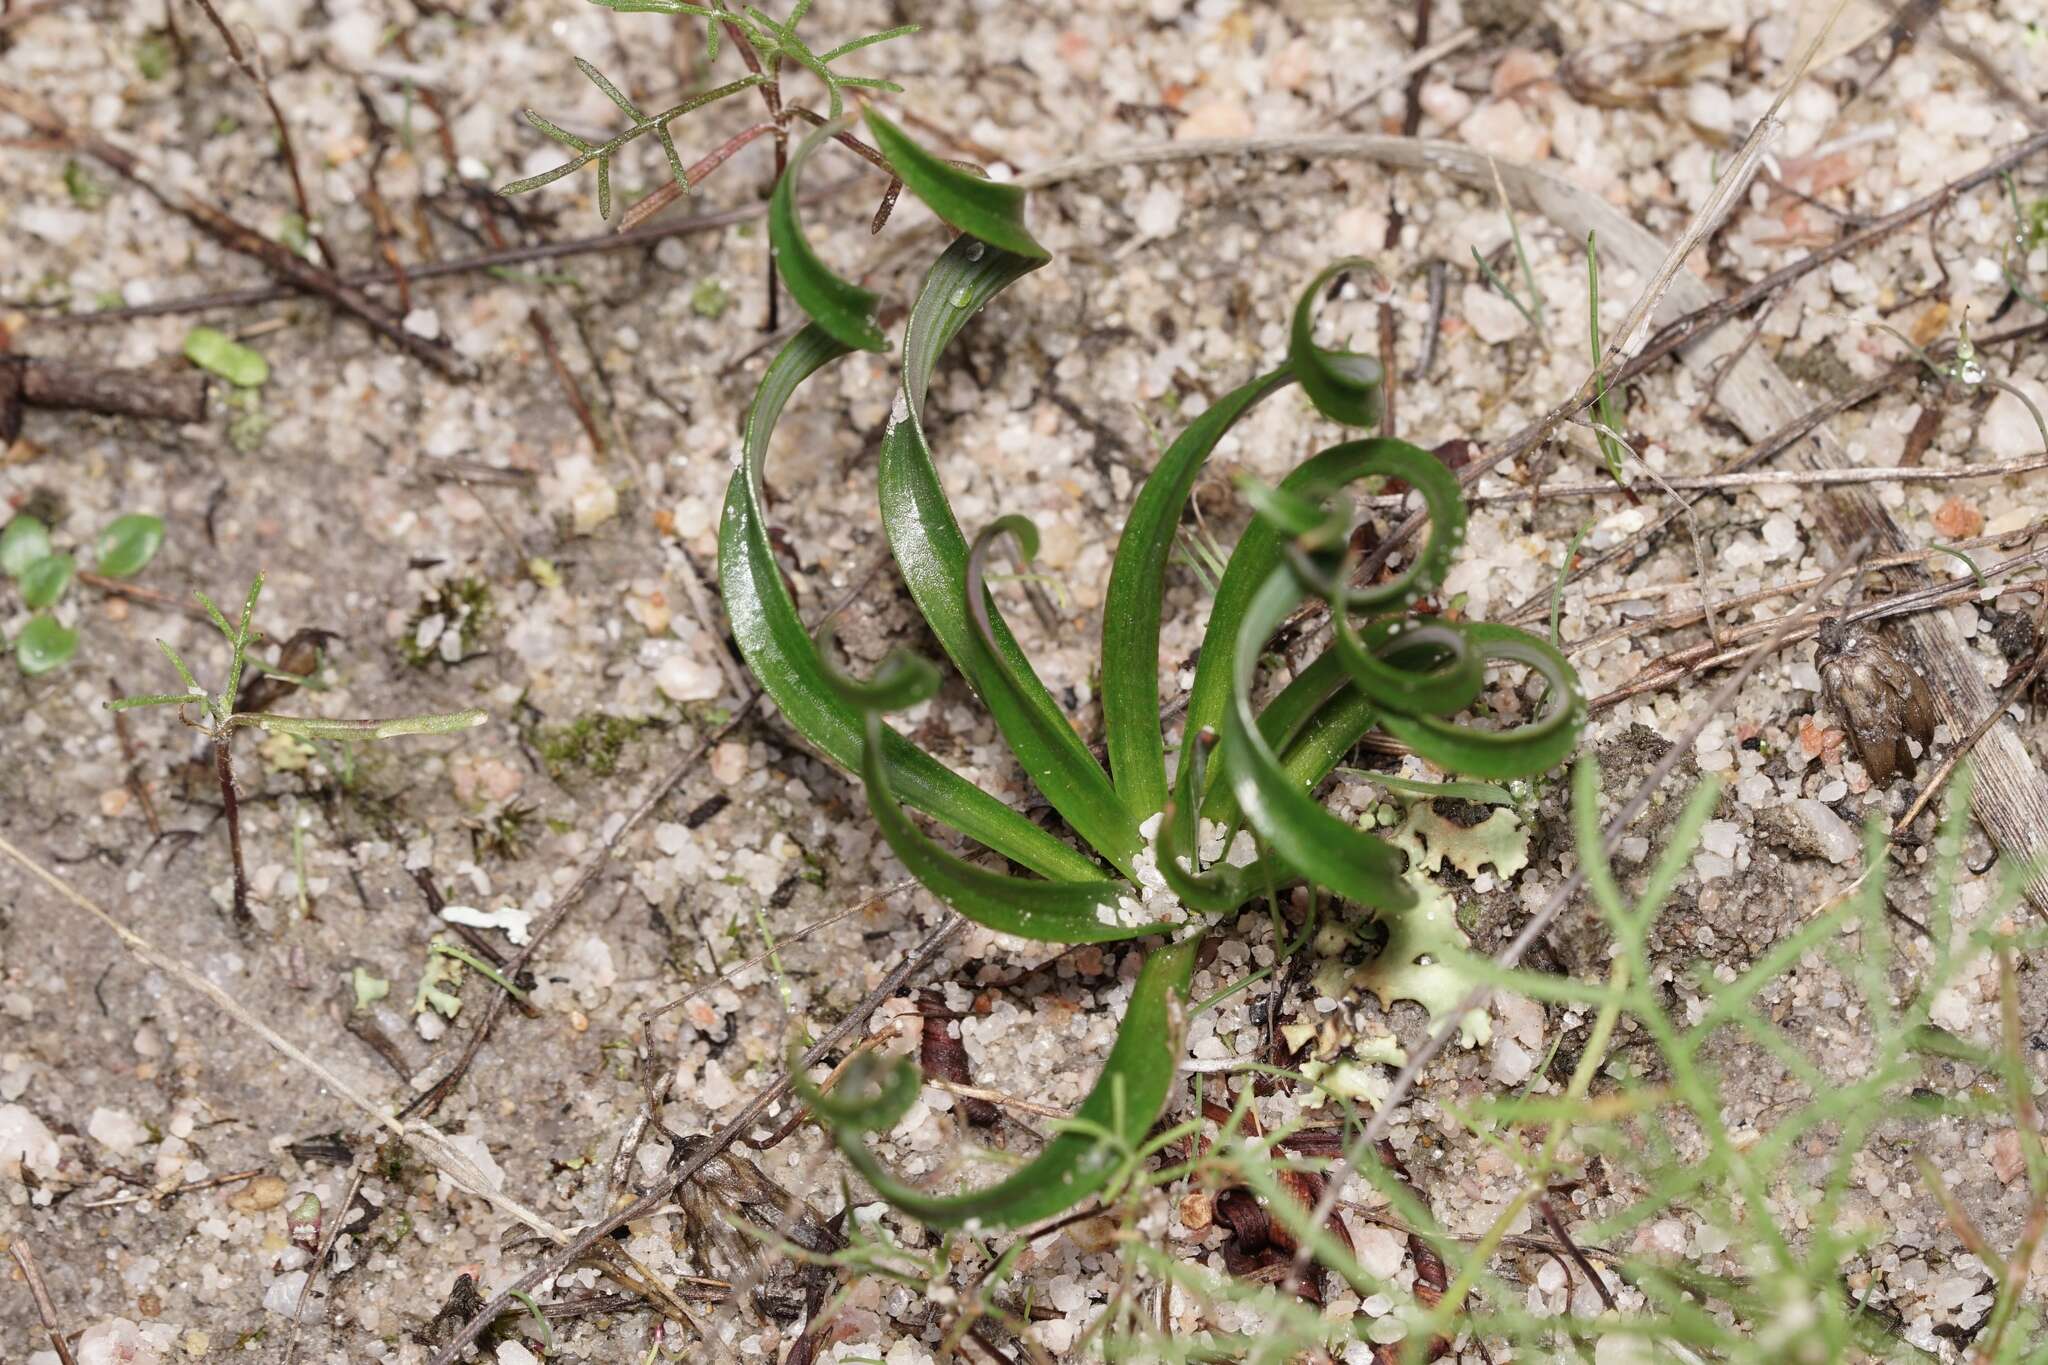 Chamaescilla spiralis (Endl.) F. Muell. resmi